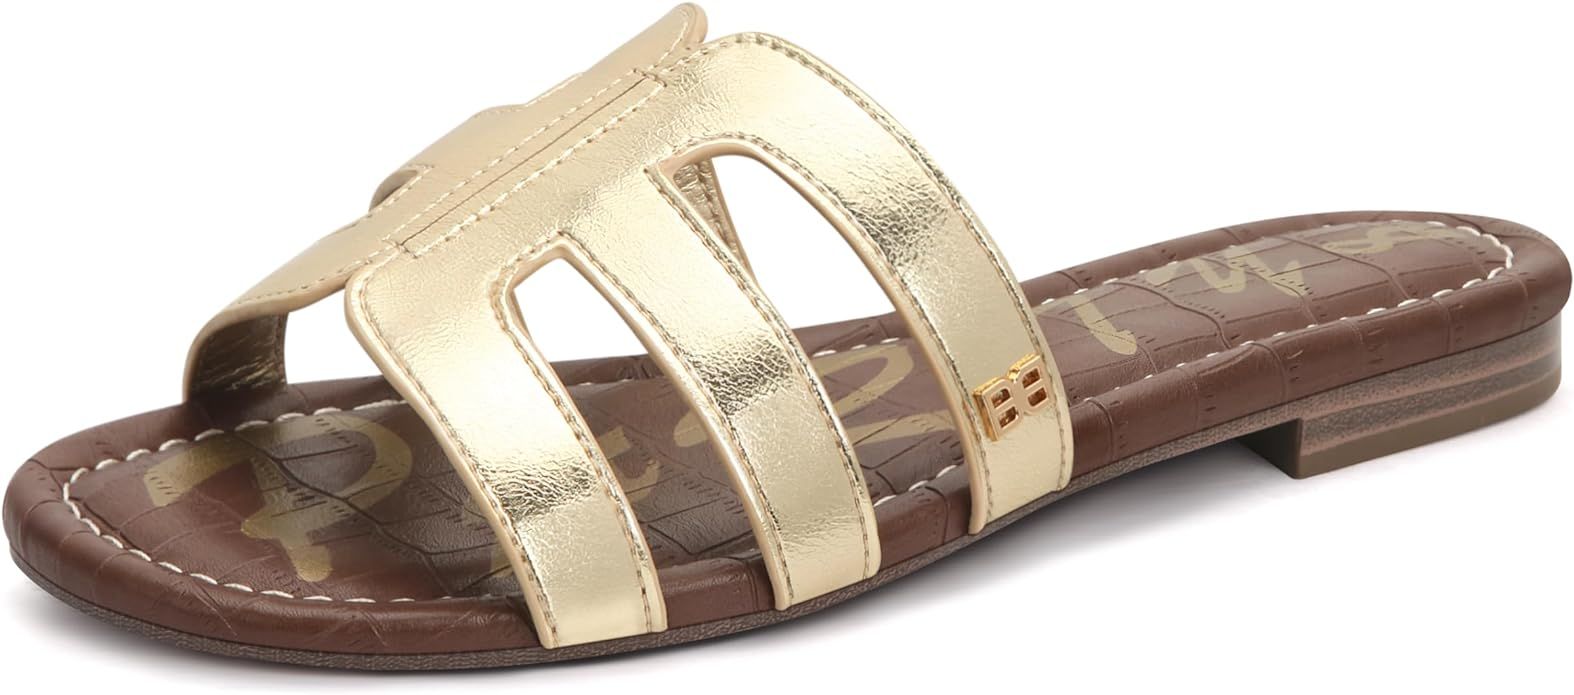 PARTY Women's Flat Sandals - Summer Open Toe H-Band Slide Sandal for Women, Slip On Casual Dressy... | Amazon (US)